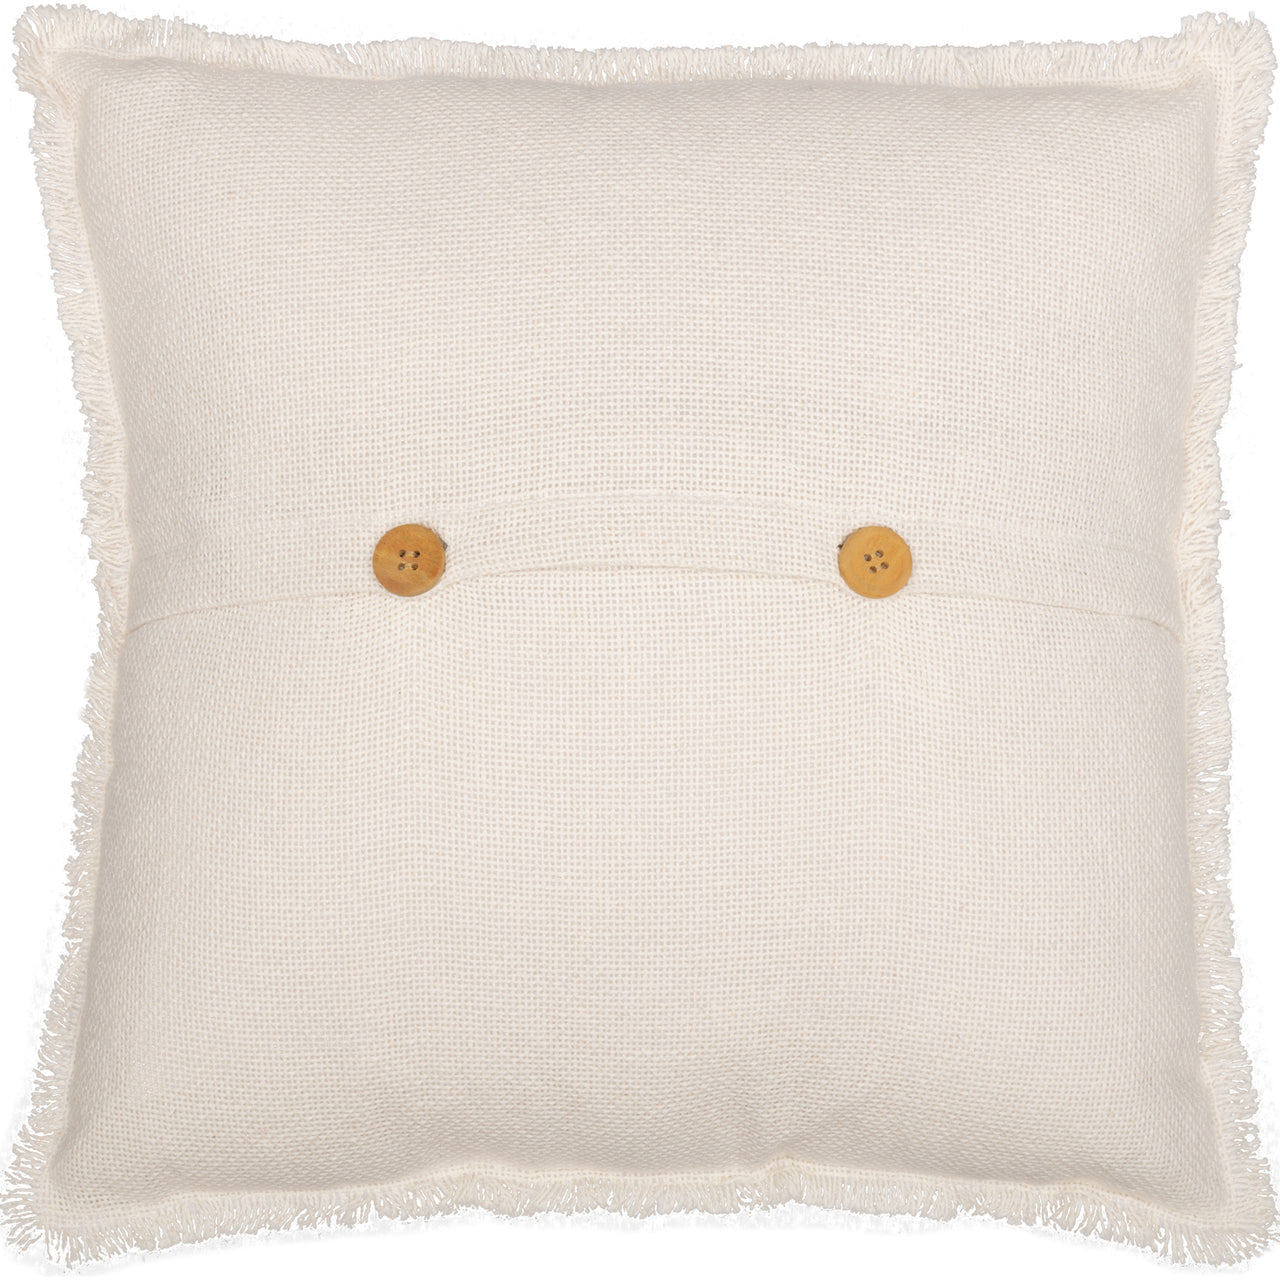 Burlap Antique White Star Pillow 18x18 VHC Brands